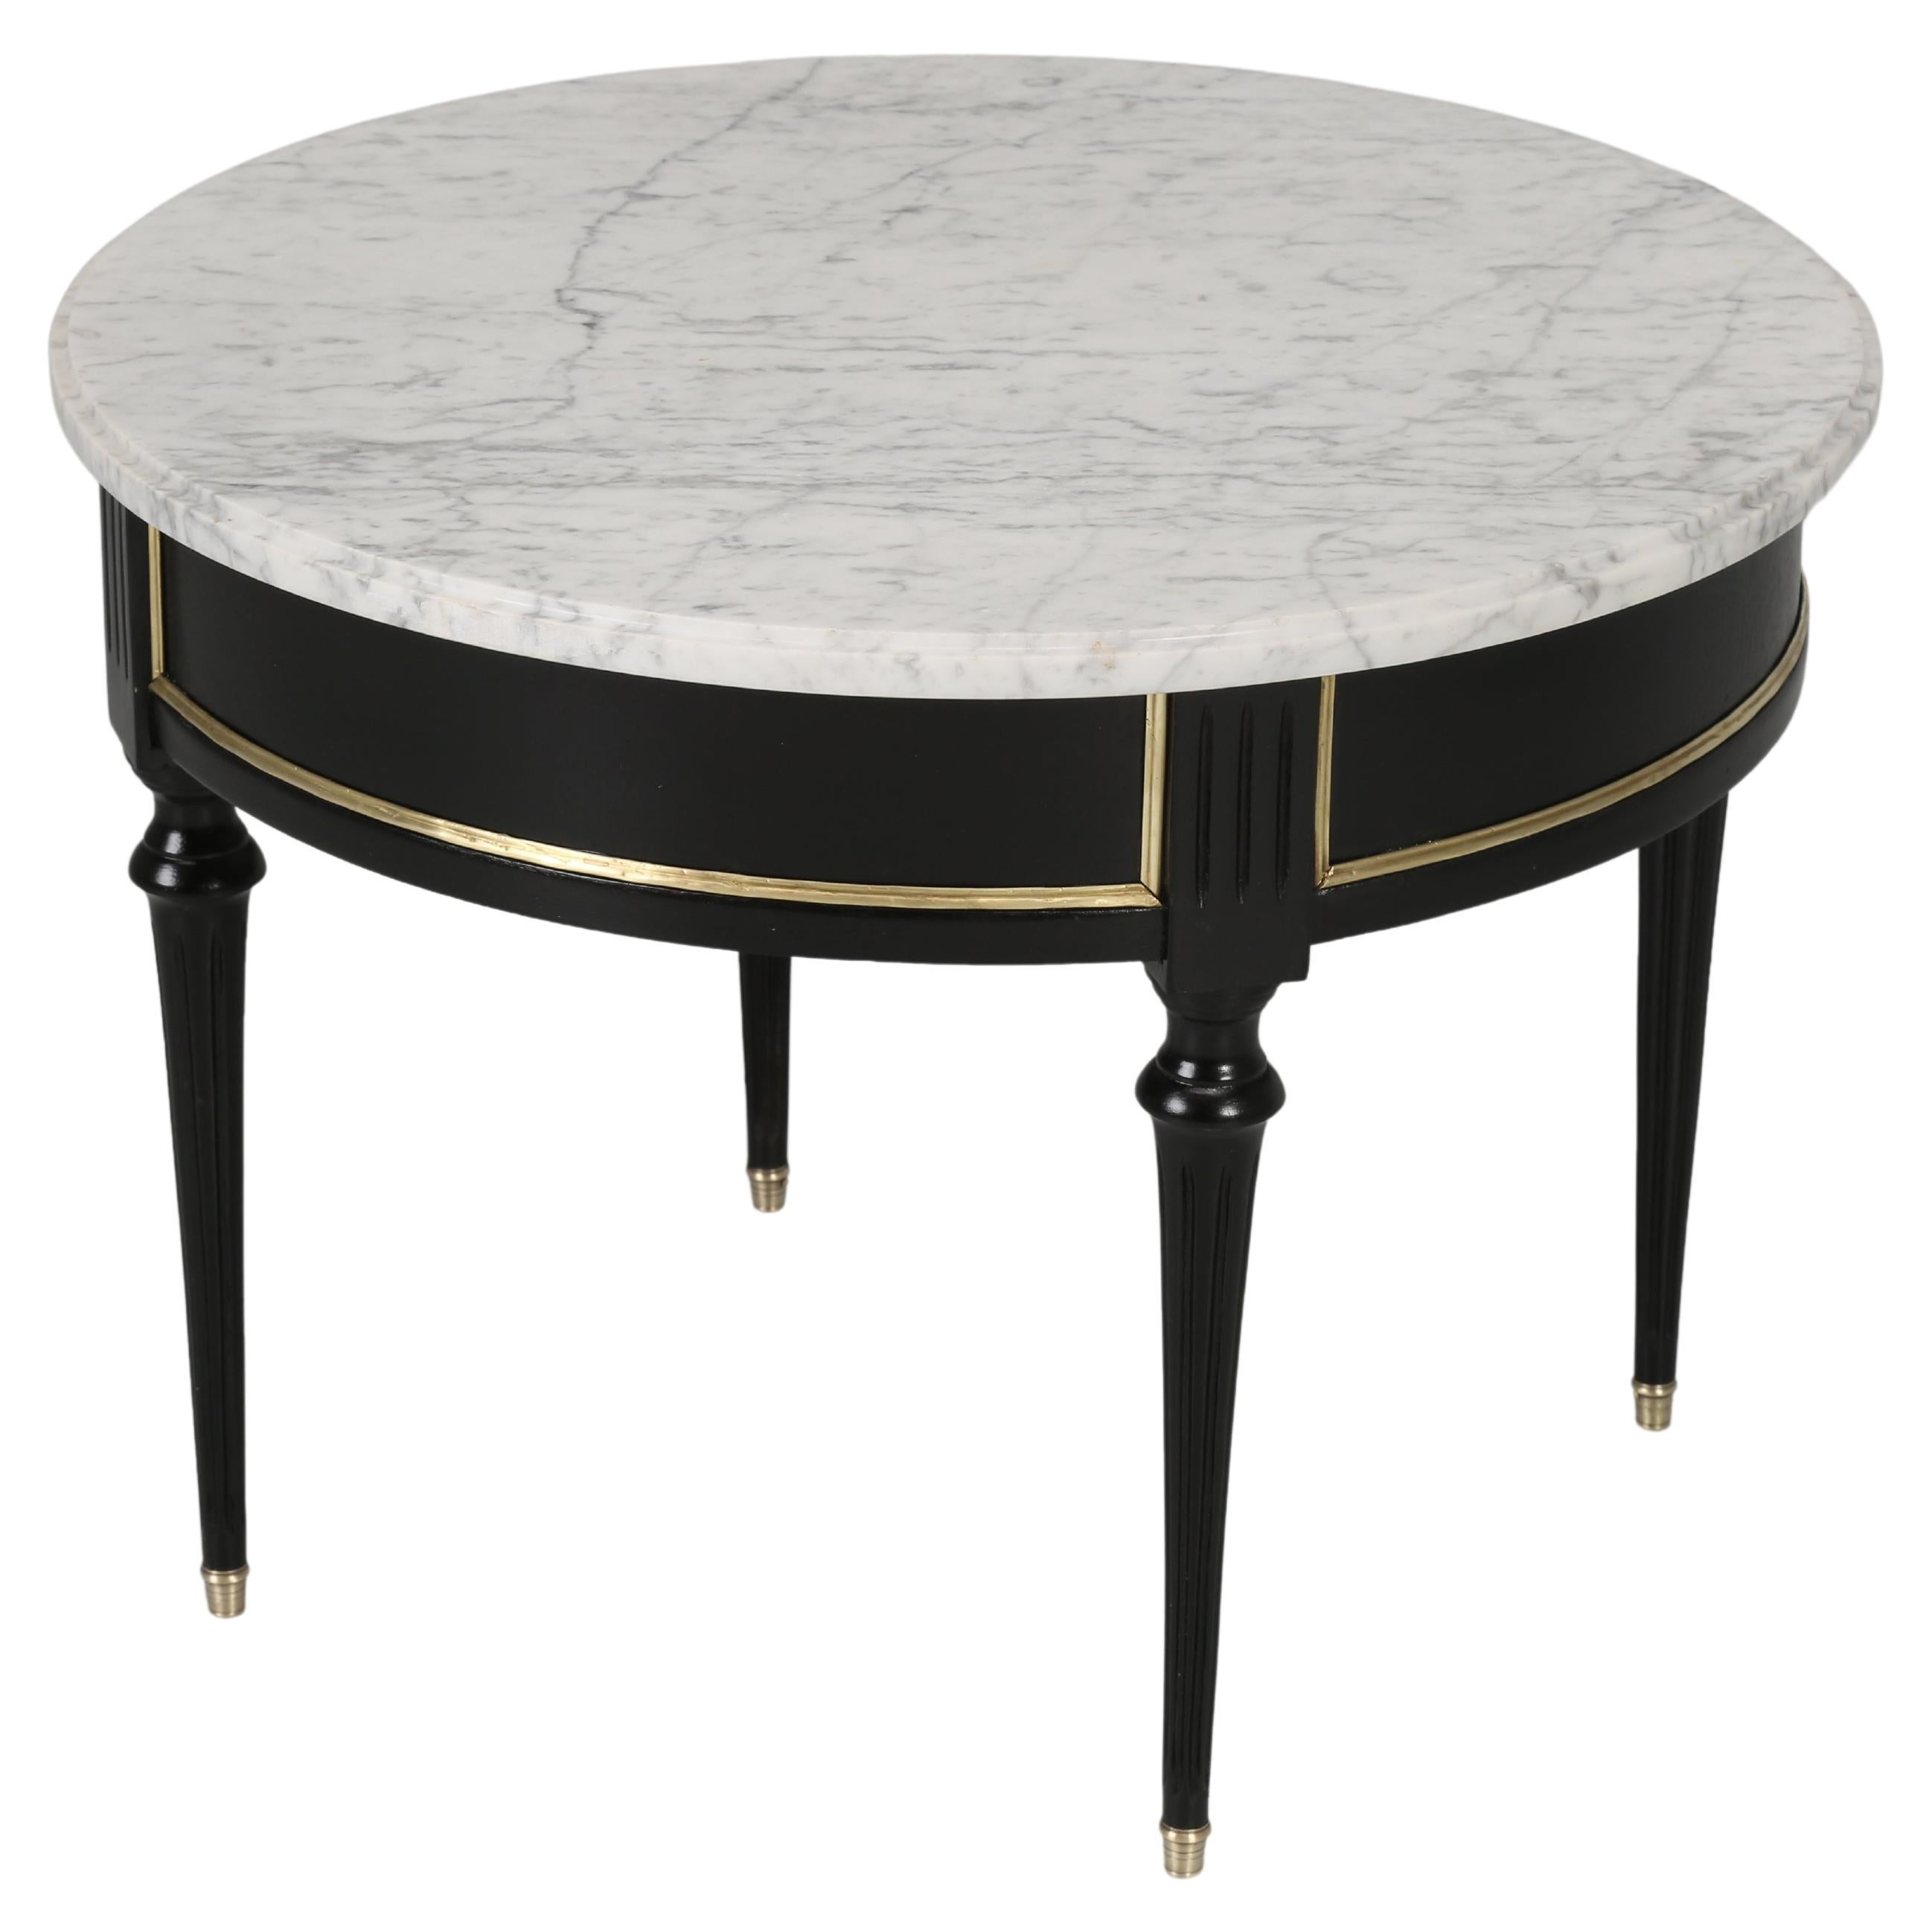 Vintage French Louis XVI Style Round Coffee Table Ebonized Finish Carrara Marble